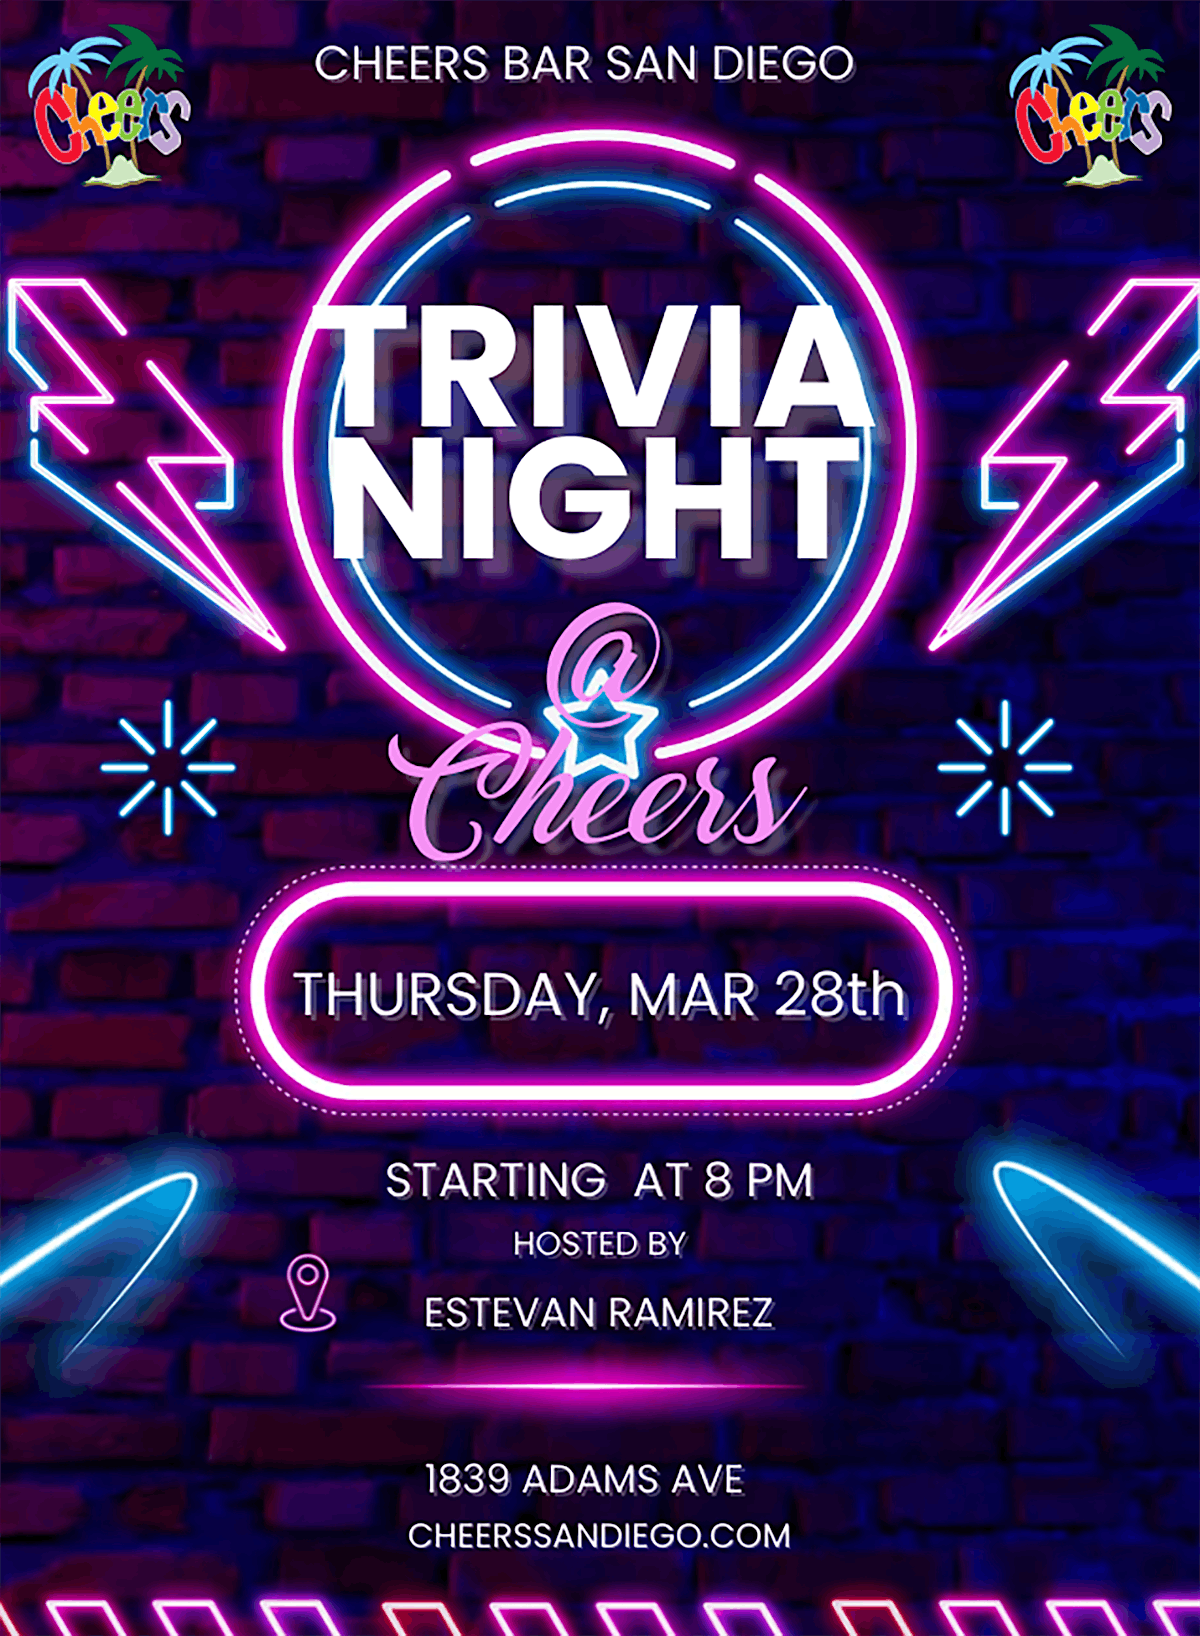 Cheers Bar San Diego Trivia Night hosted by Estevan Ramirez